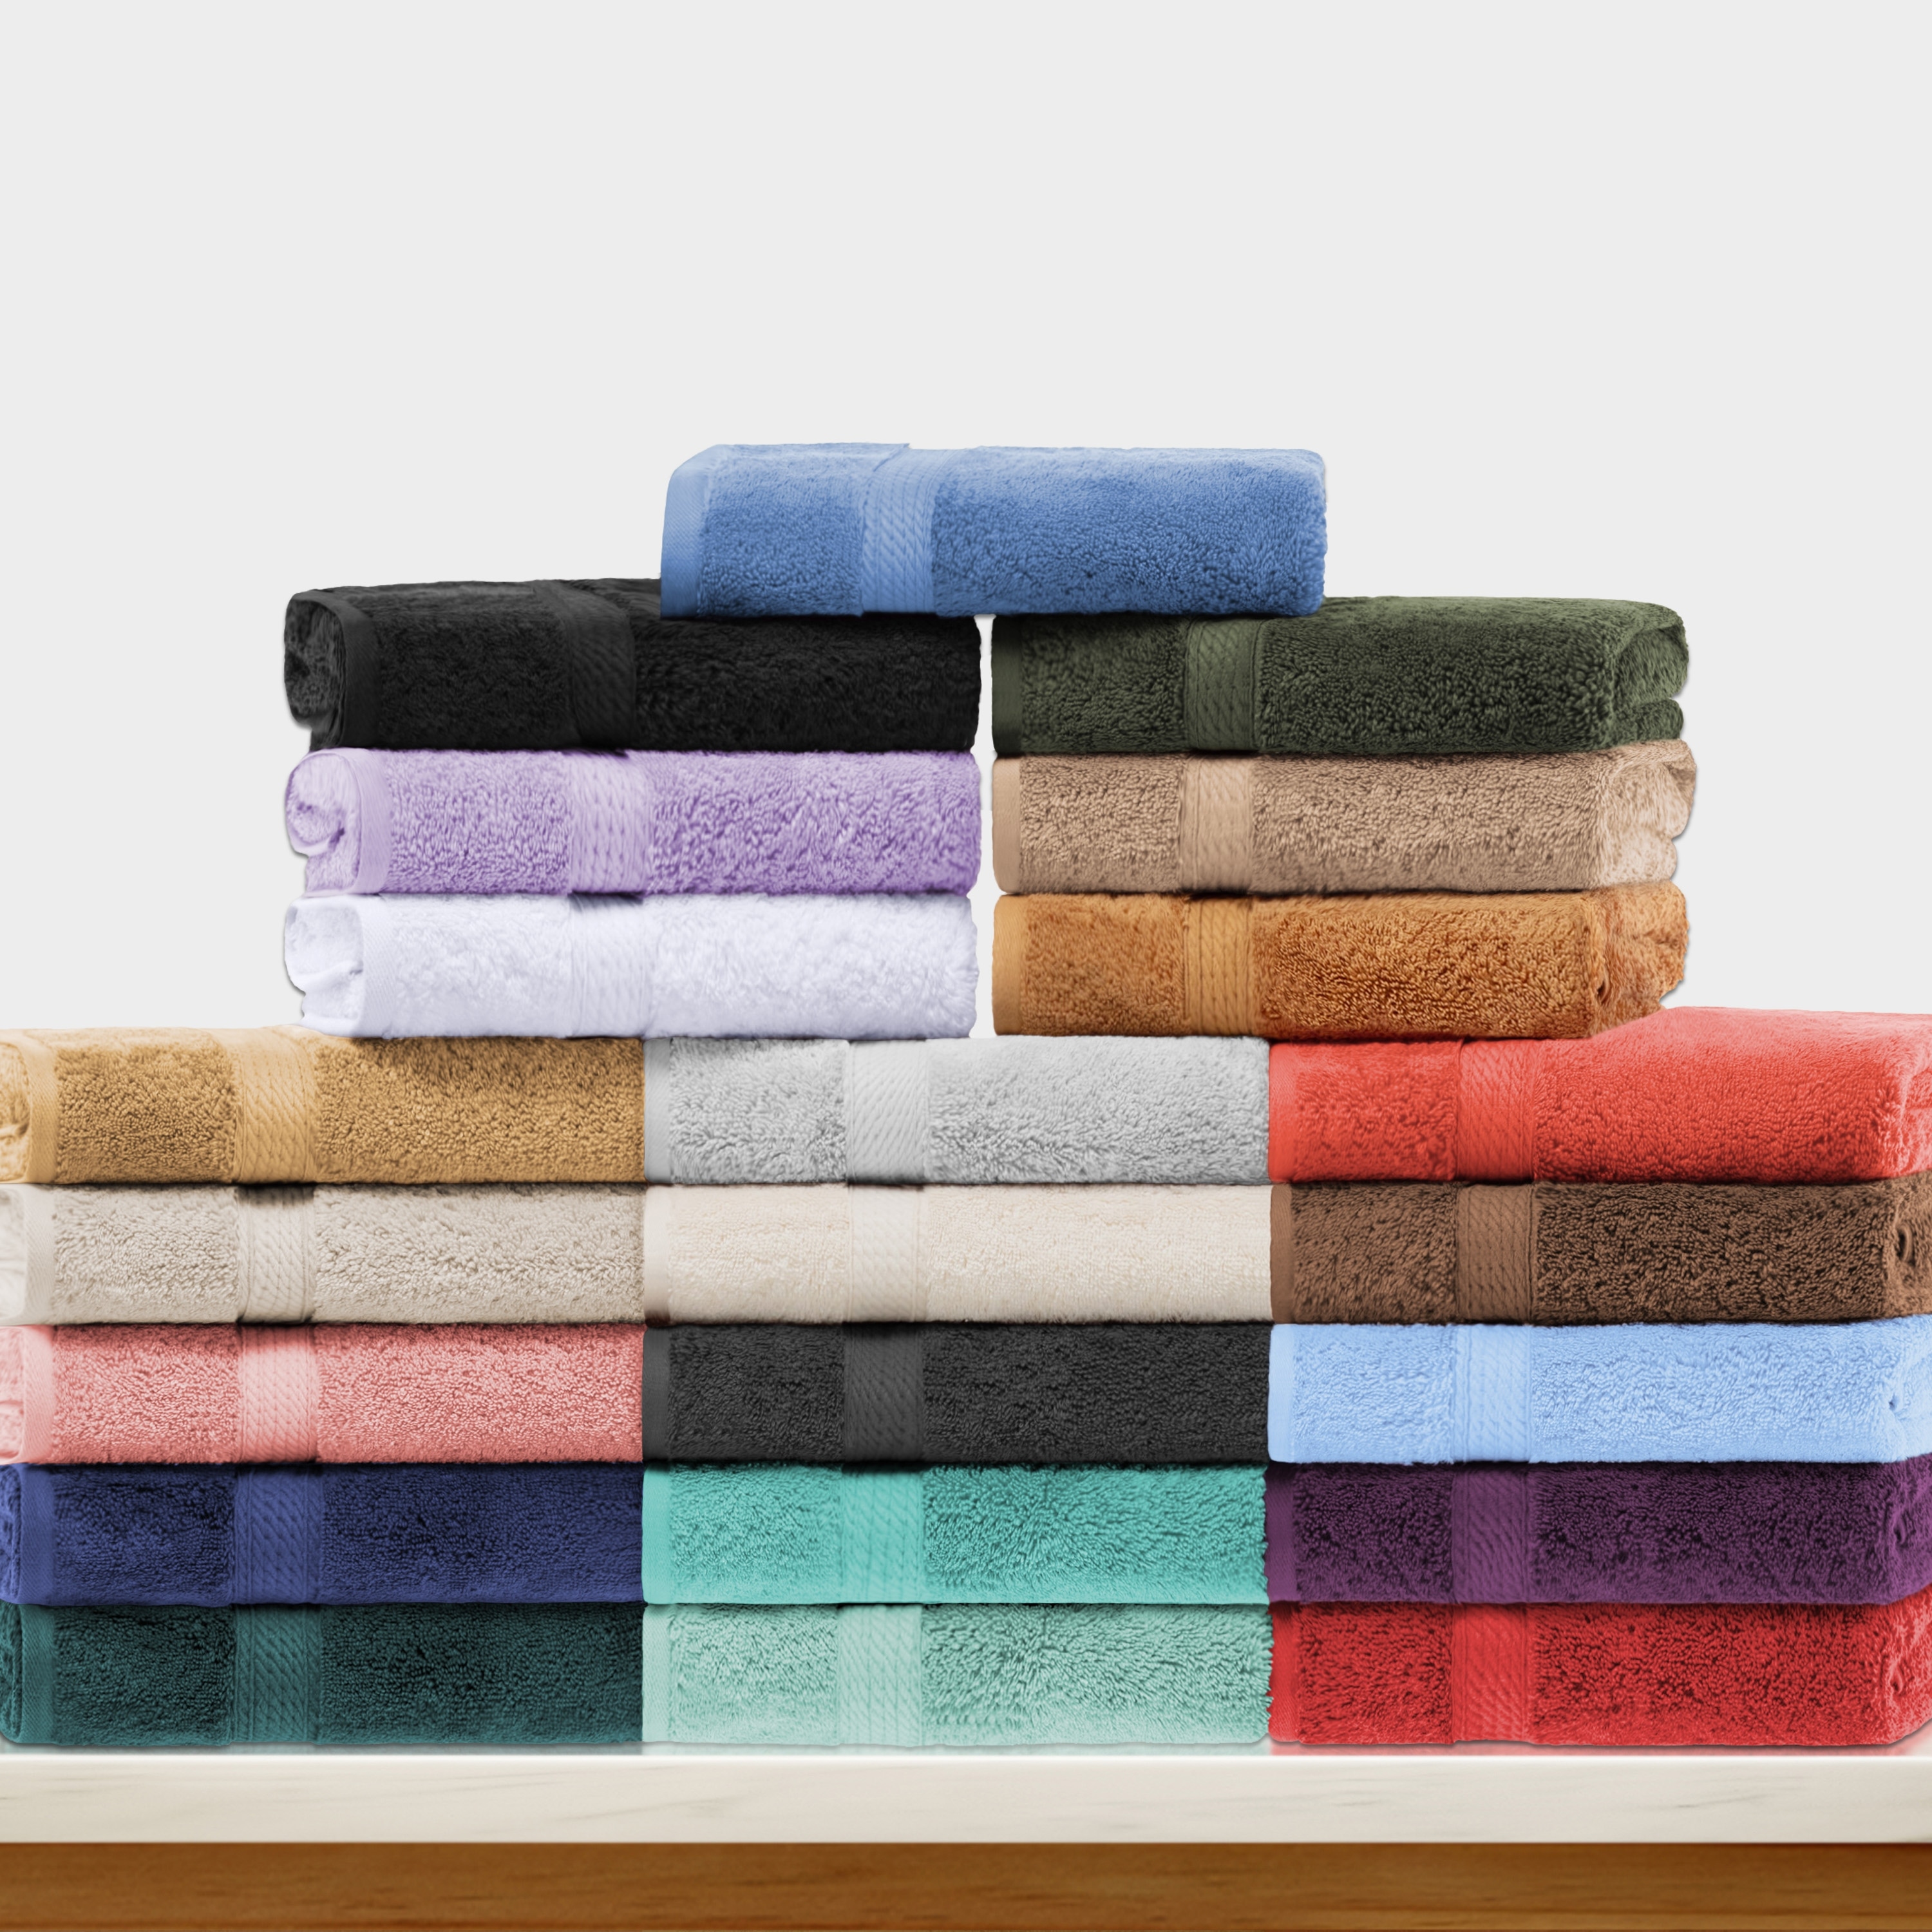 Laural Home Blush Spa Collection 6-Pc. Cotton Towel Set